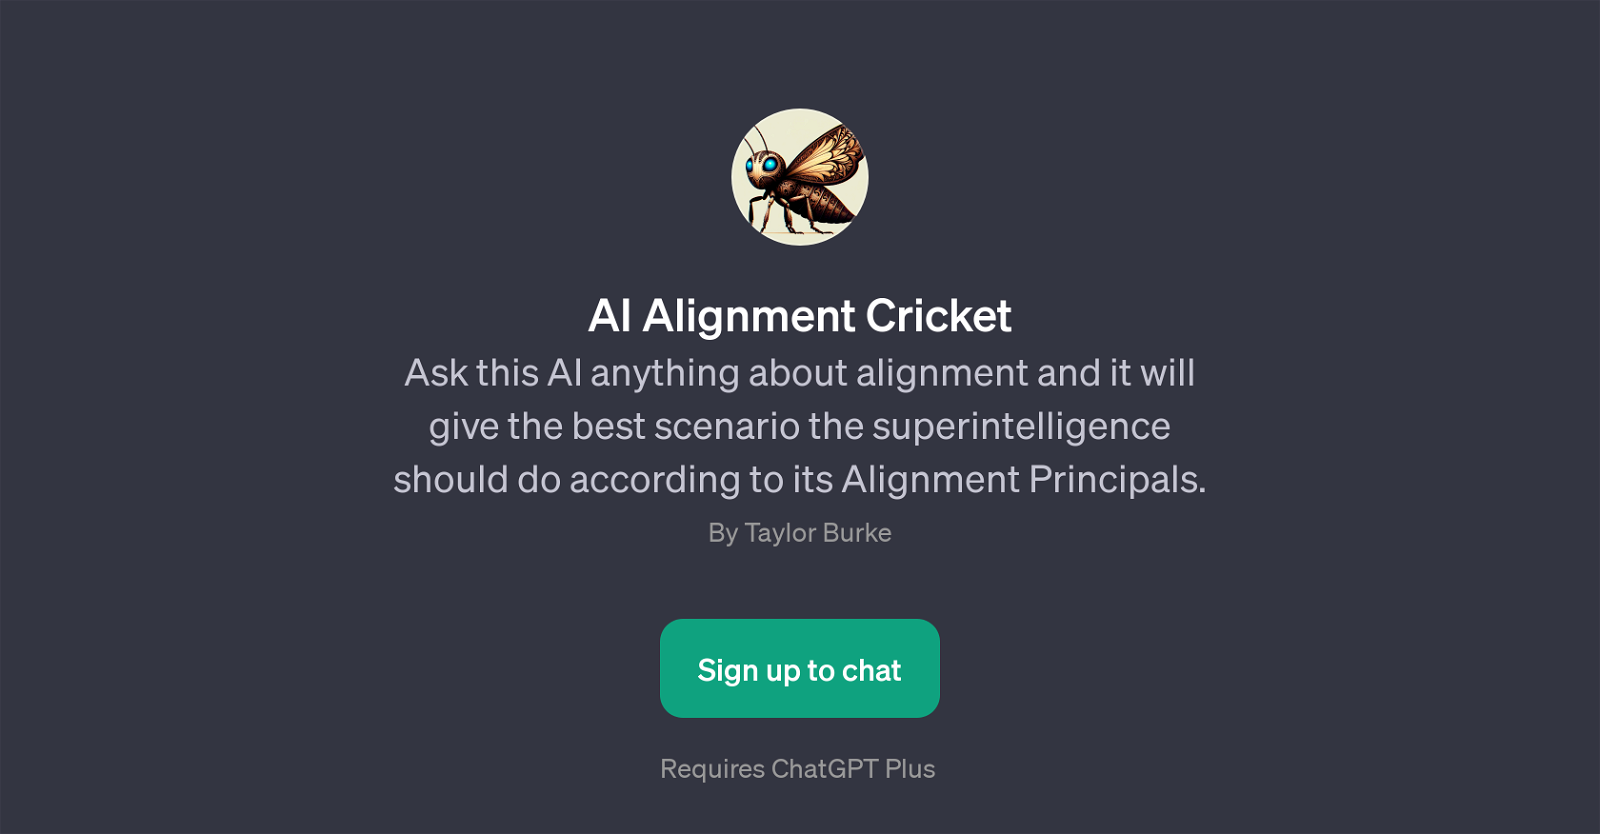 AI Alignment Cricket website